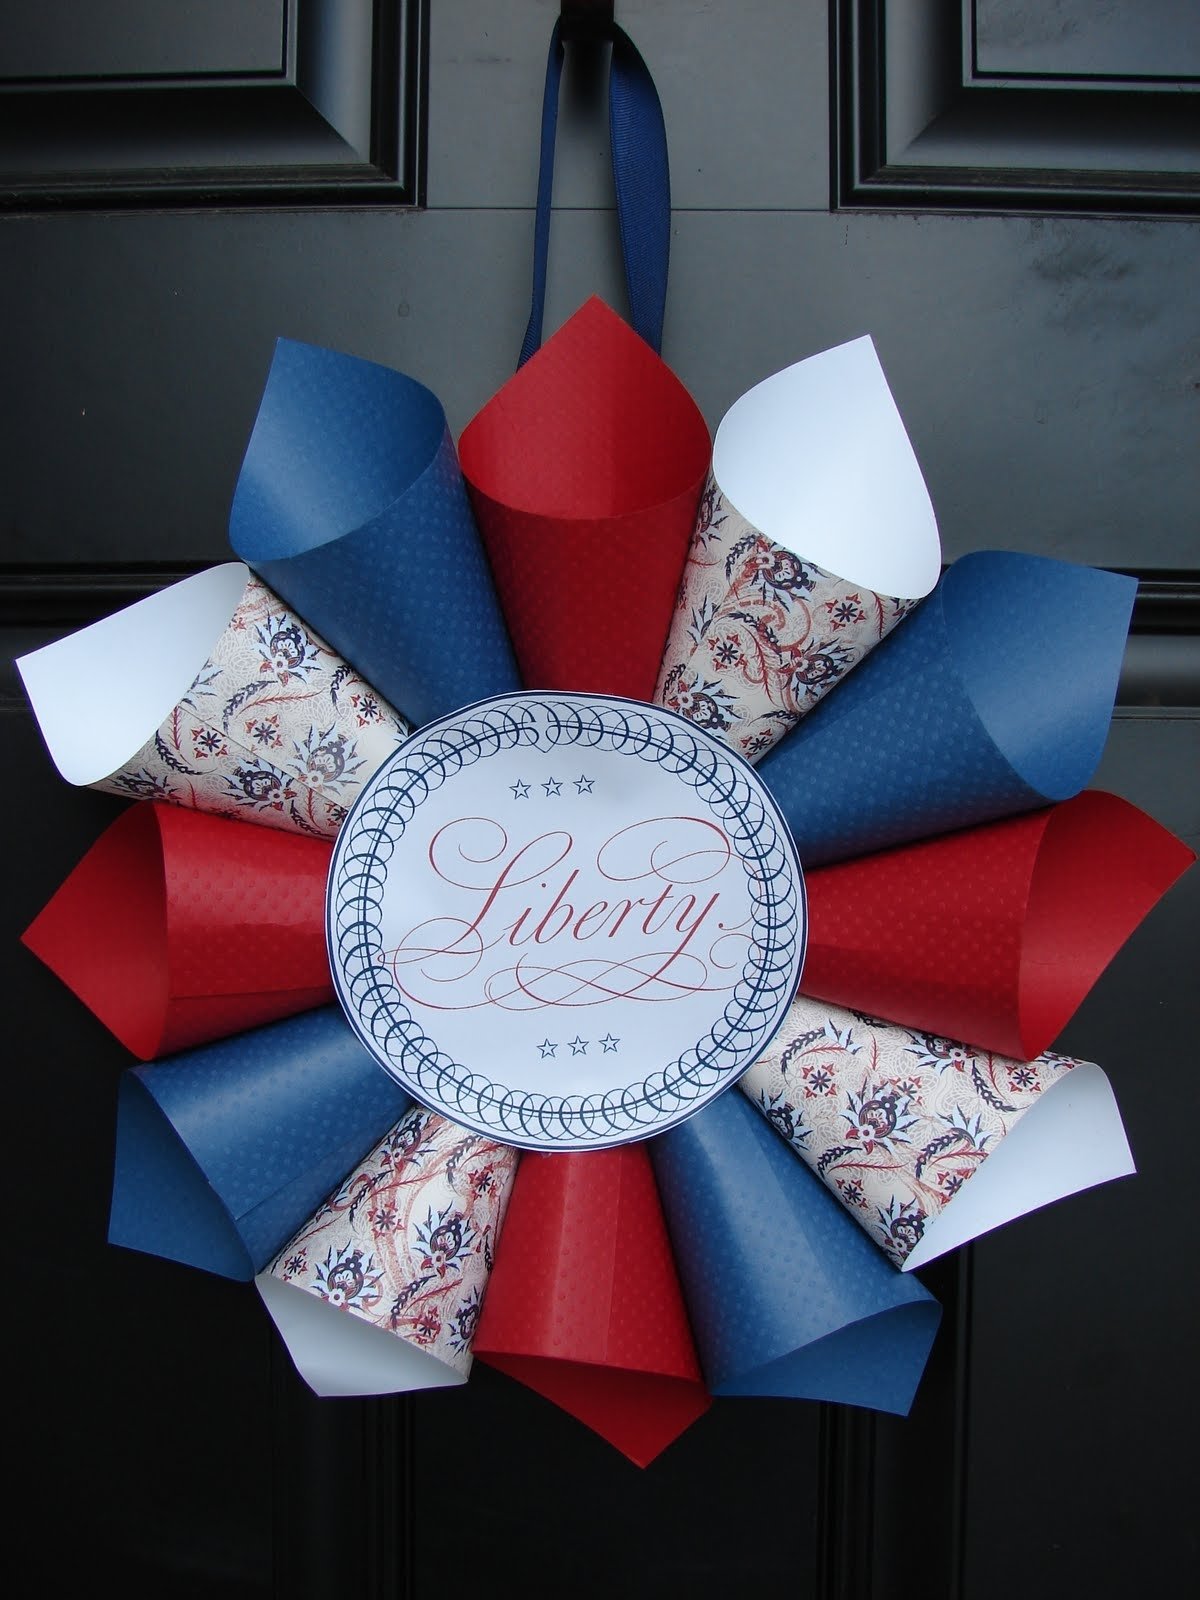 10 Best Fourth Of July Craft Ideas festive july 4th diy wreaths easy simple inspired wreaths 2022